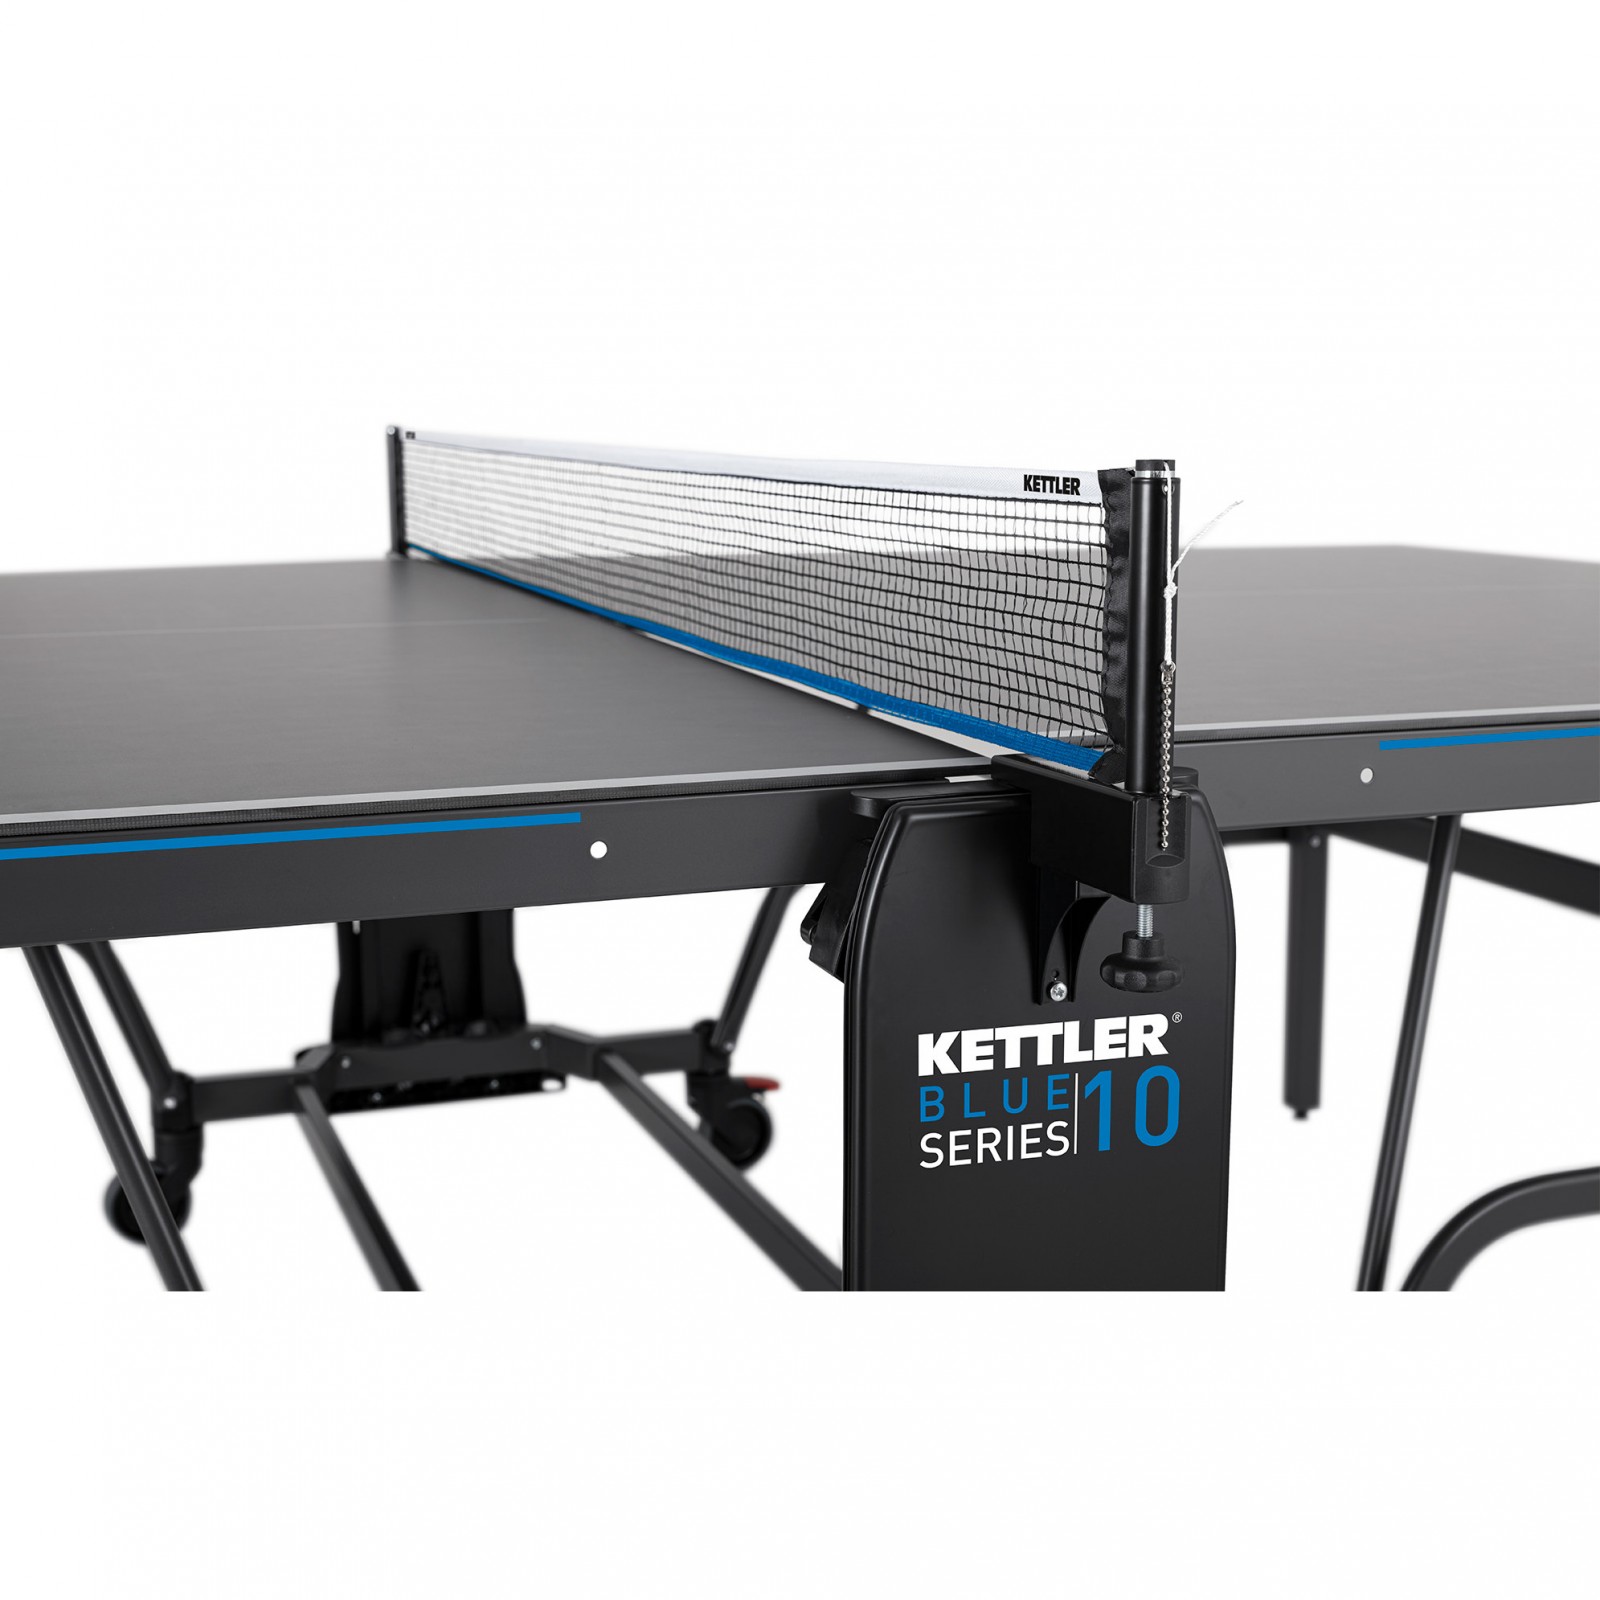 Теннисного кетлер. Стол для настольного тенниса Кетлер. Kettler Outdoor теннисный стол. Стол для пинг понга Kettler. Kettler Outdoor 10.